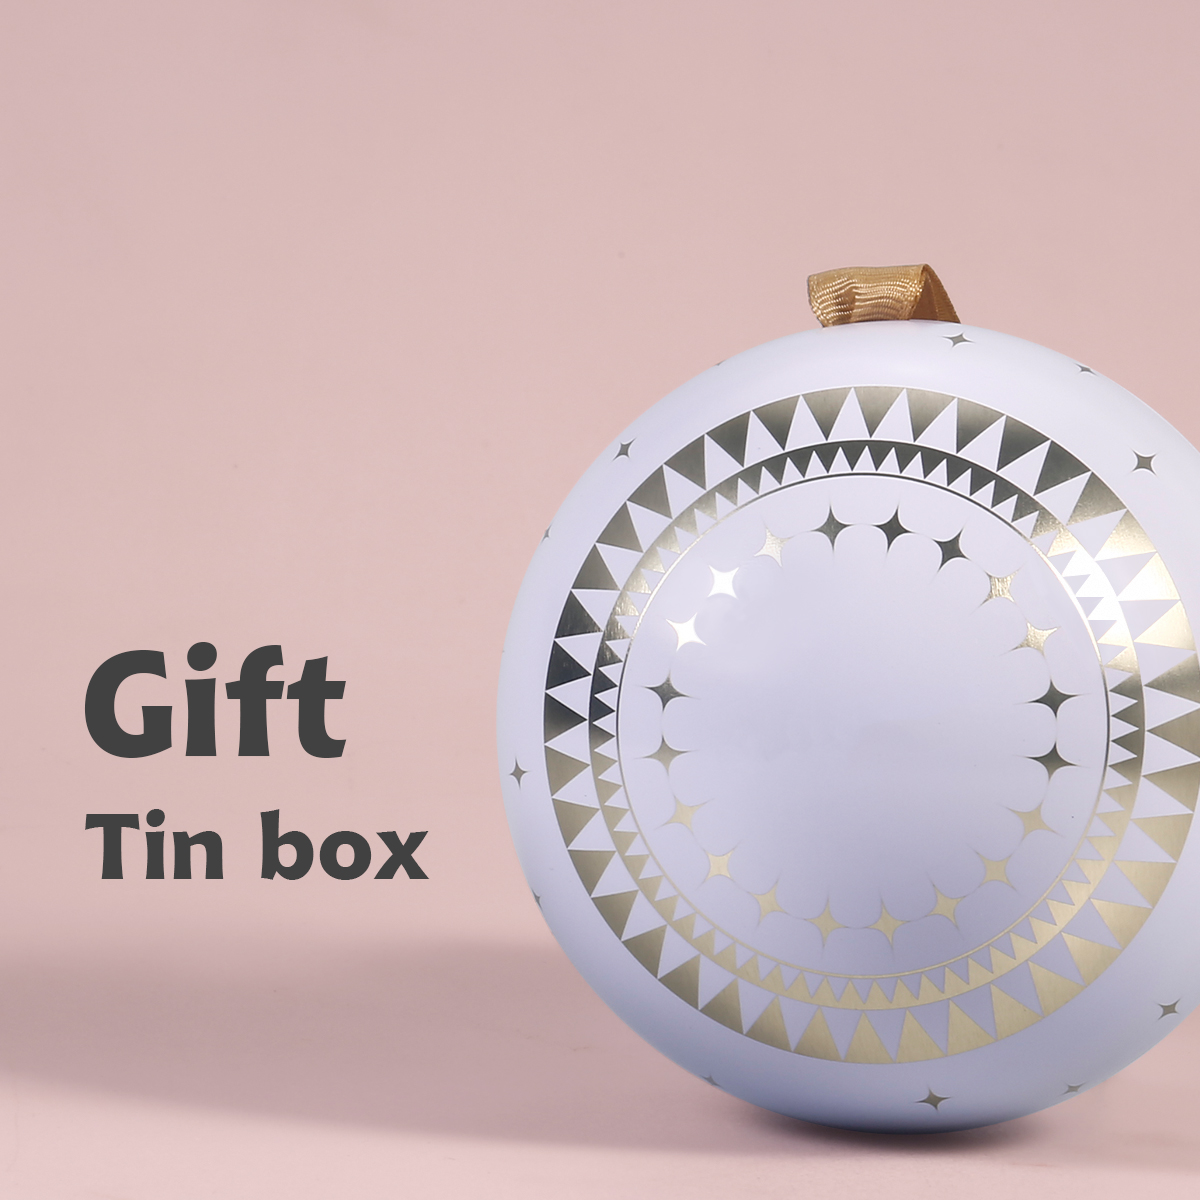 Gift Tin box